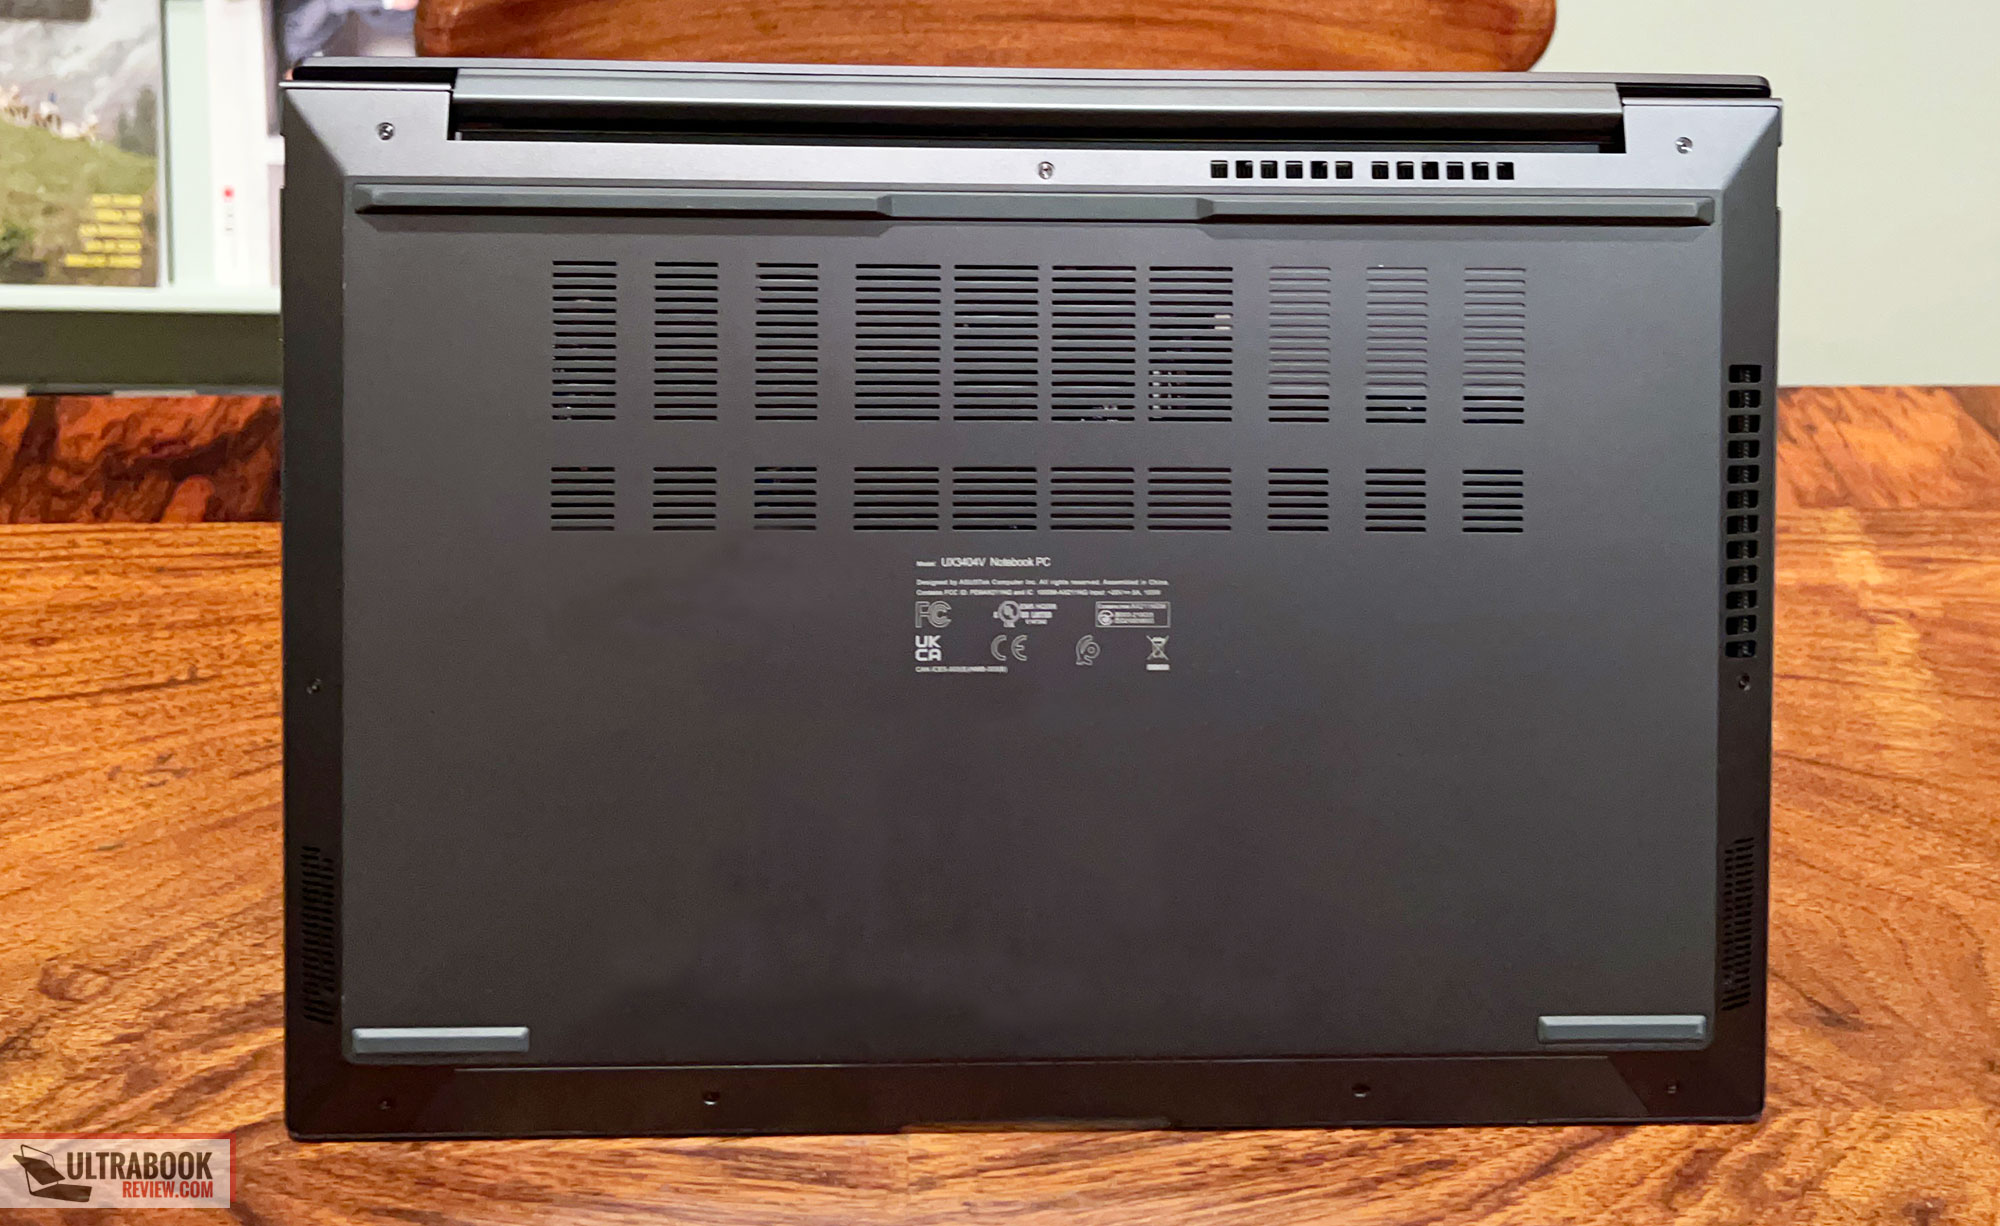 Zenbook 14X OLED (UX3404)